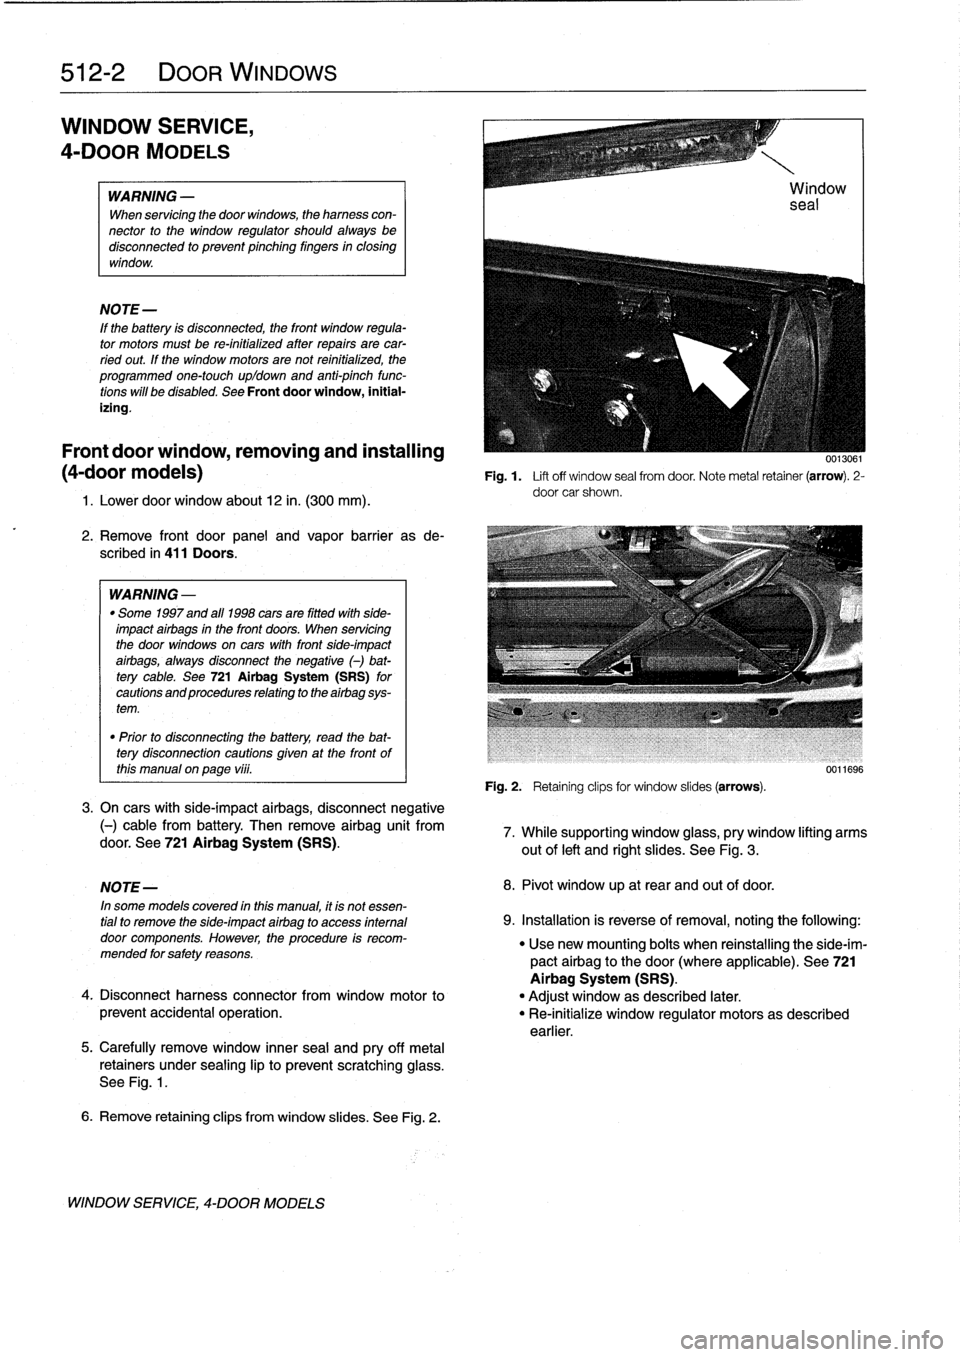 BMW 318i 1995 E36 Workshop Manual 
512-2

	

DOOR
WINDOWS

WINDOW
SERVICE,

4-DOOR
MODELS

WARNING
-

When
servicing
the
door
wíndows,
theharness
con-
nector
to
the
window
regulator
shouldalways
be
disconnected
to
prevent
pinching
fi